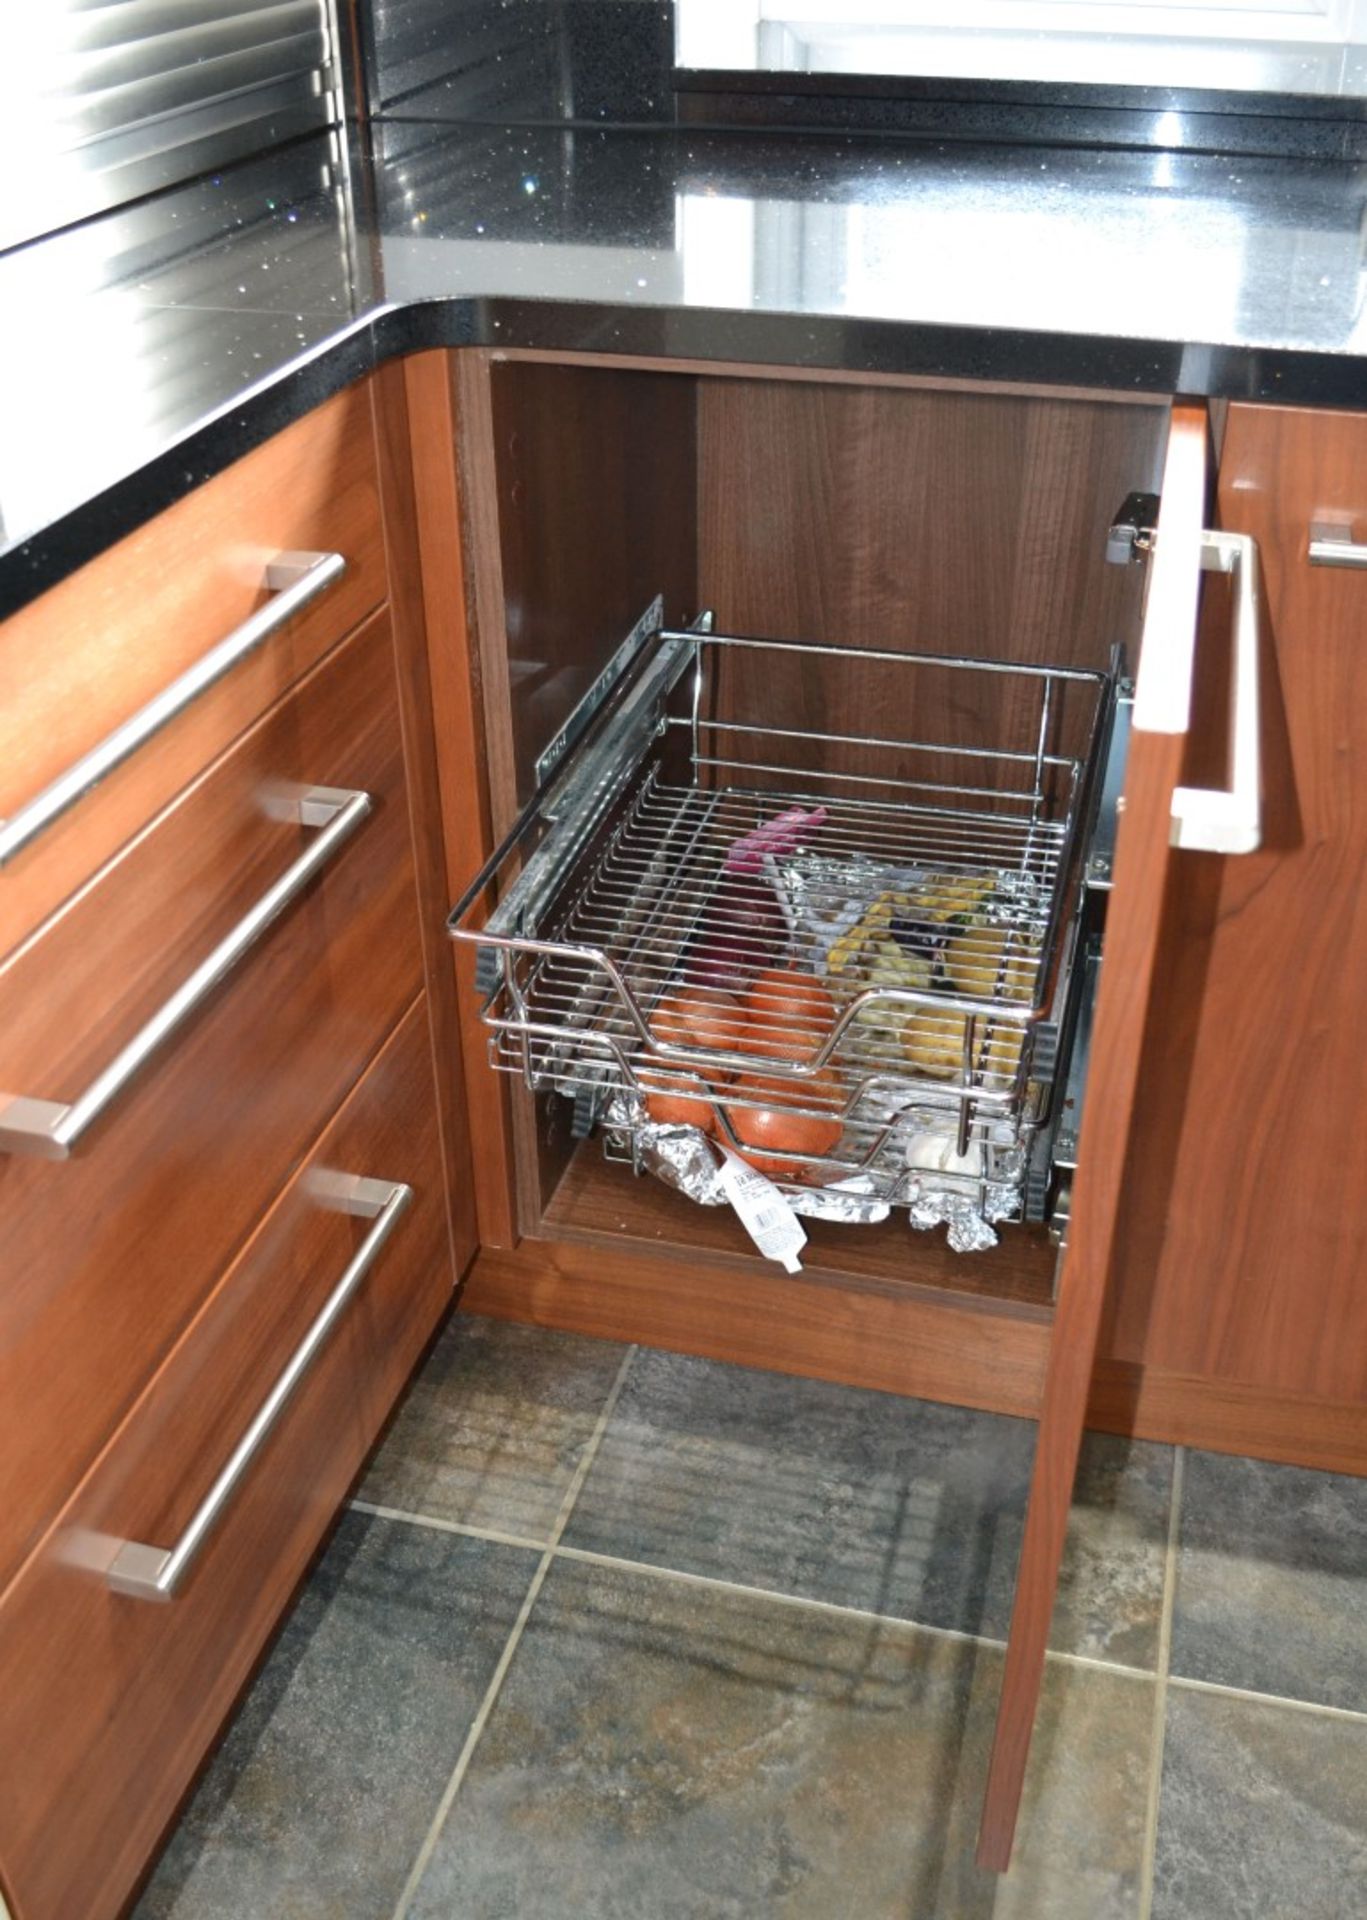 1 x Kitchen Design Bespoke Fitted Kitchen With Silestone Worktops & Neff Appliances - Superb - Image 29 of 59